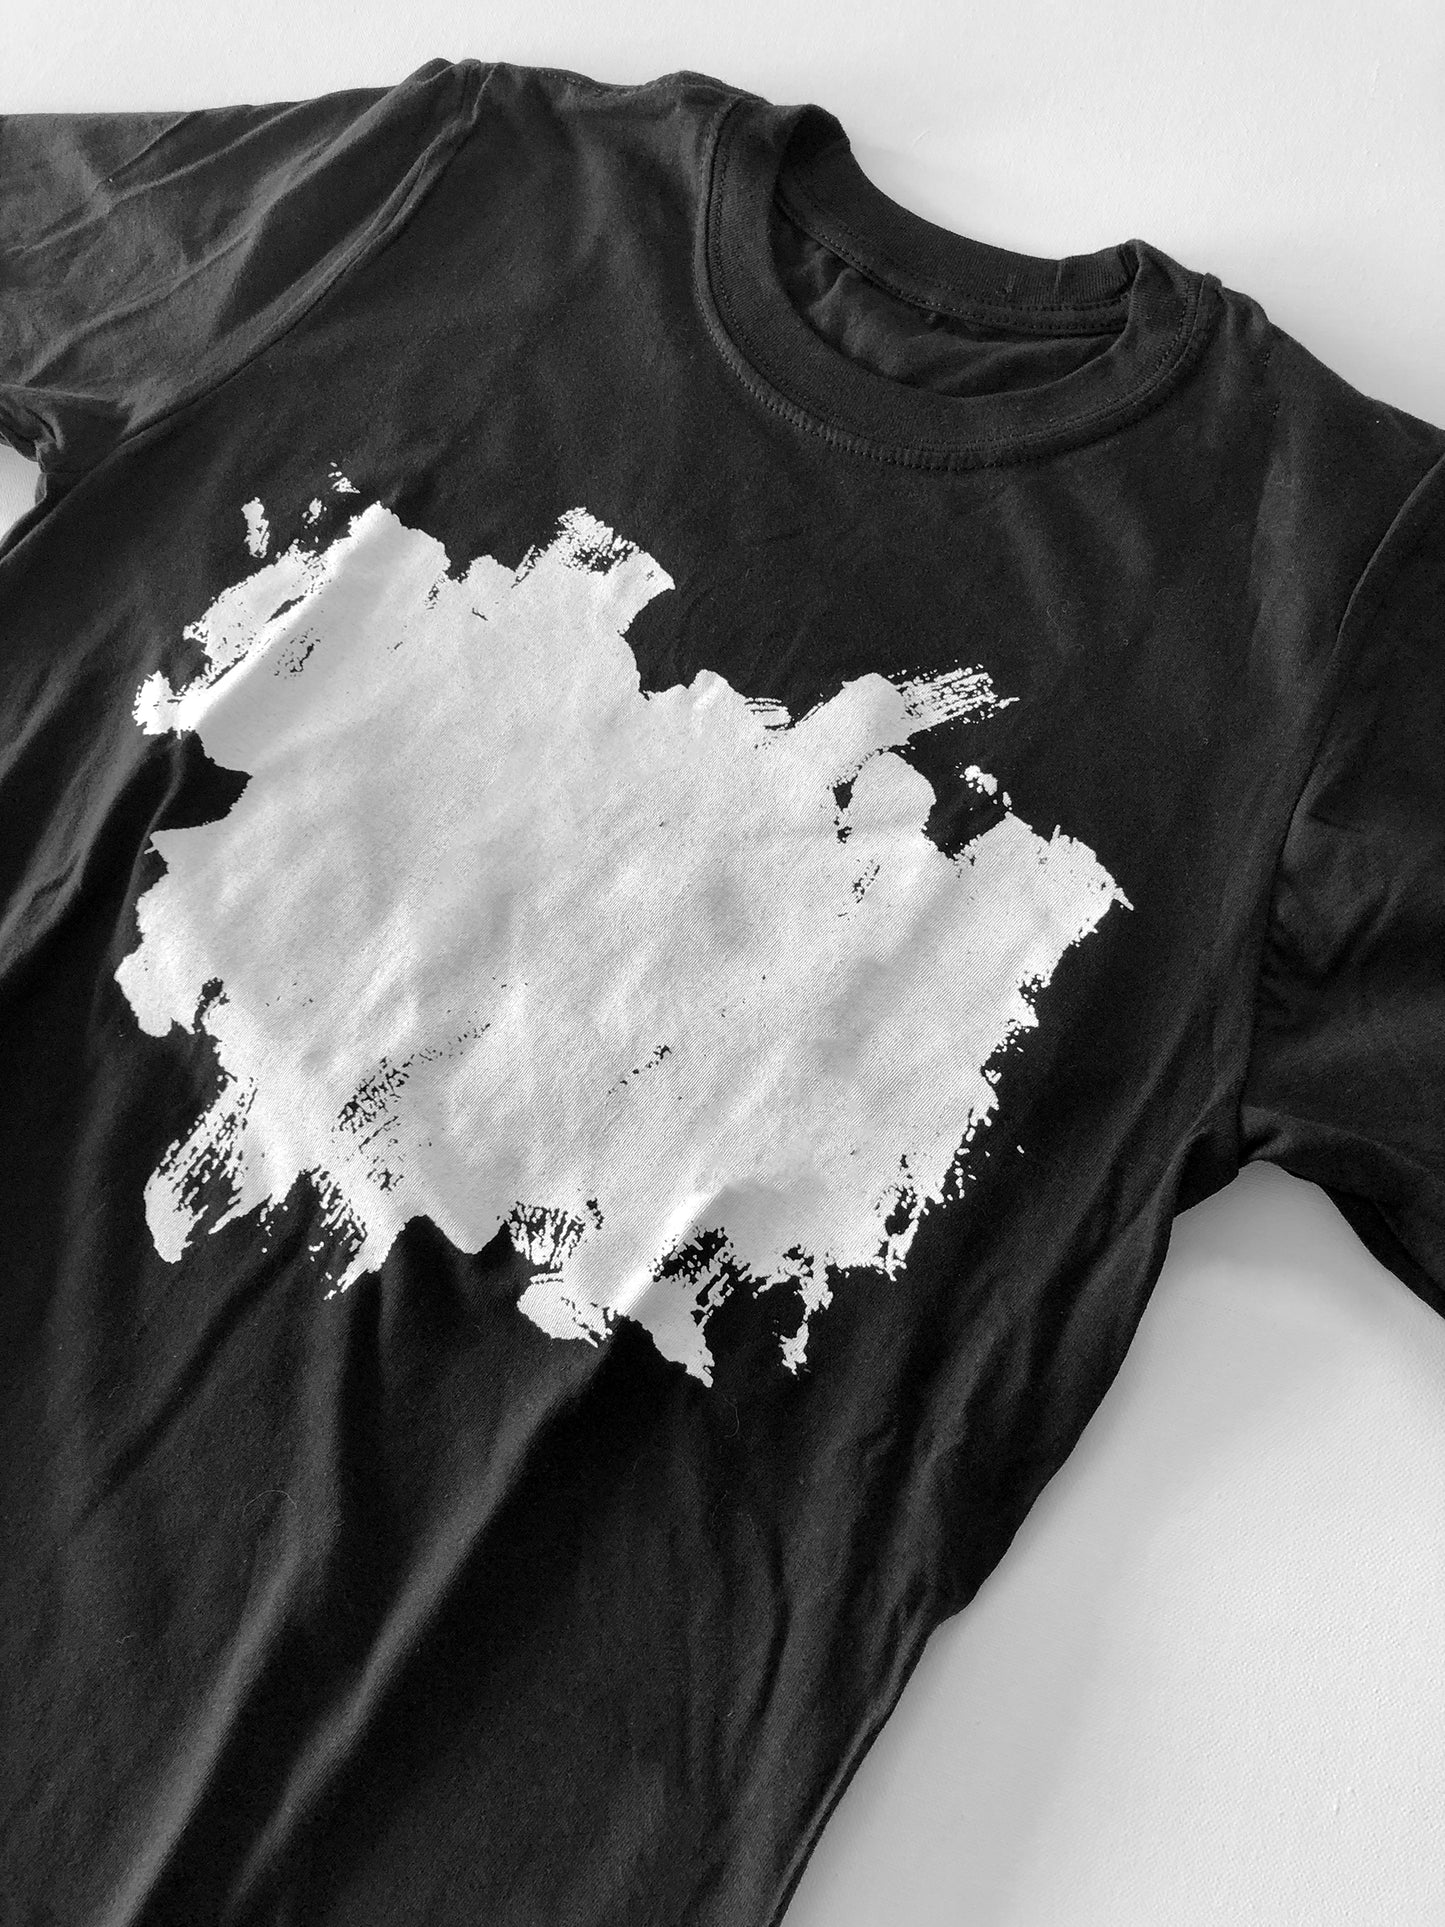 GREI T-shirt blot Black